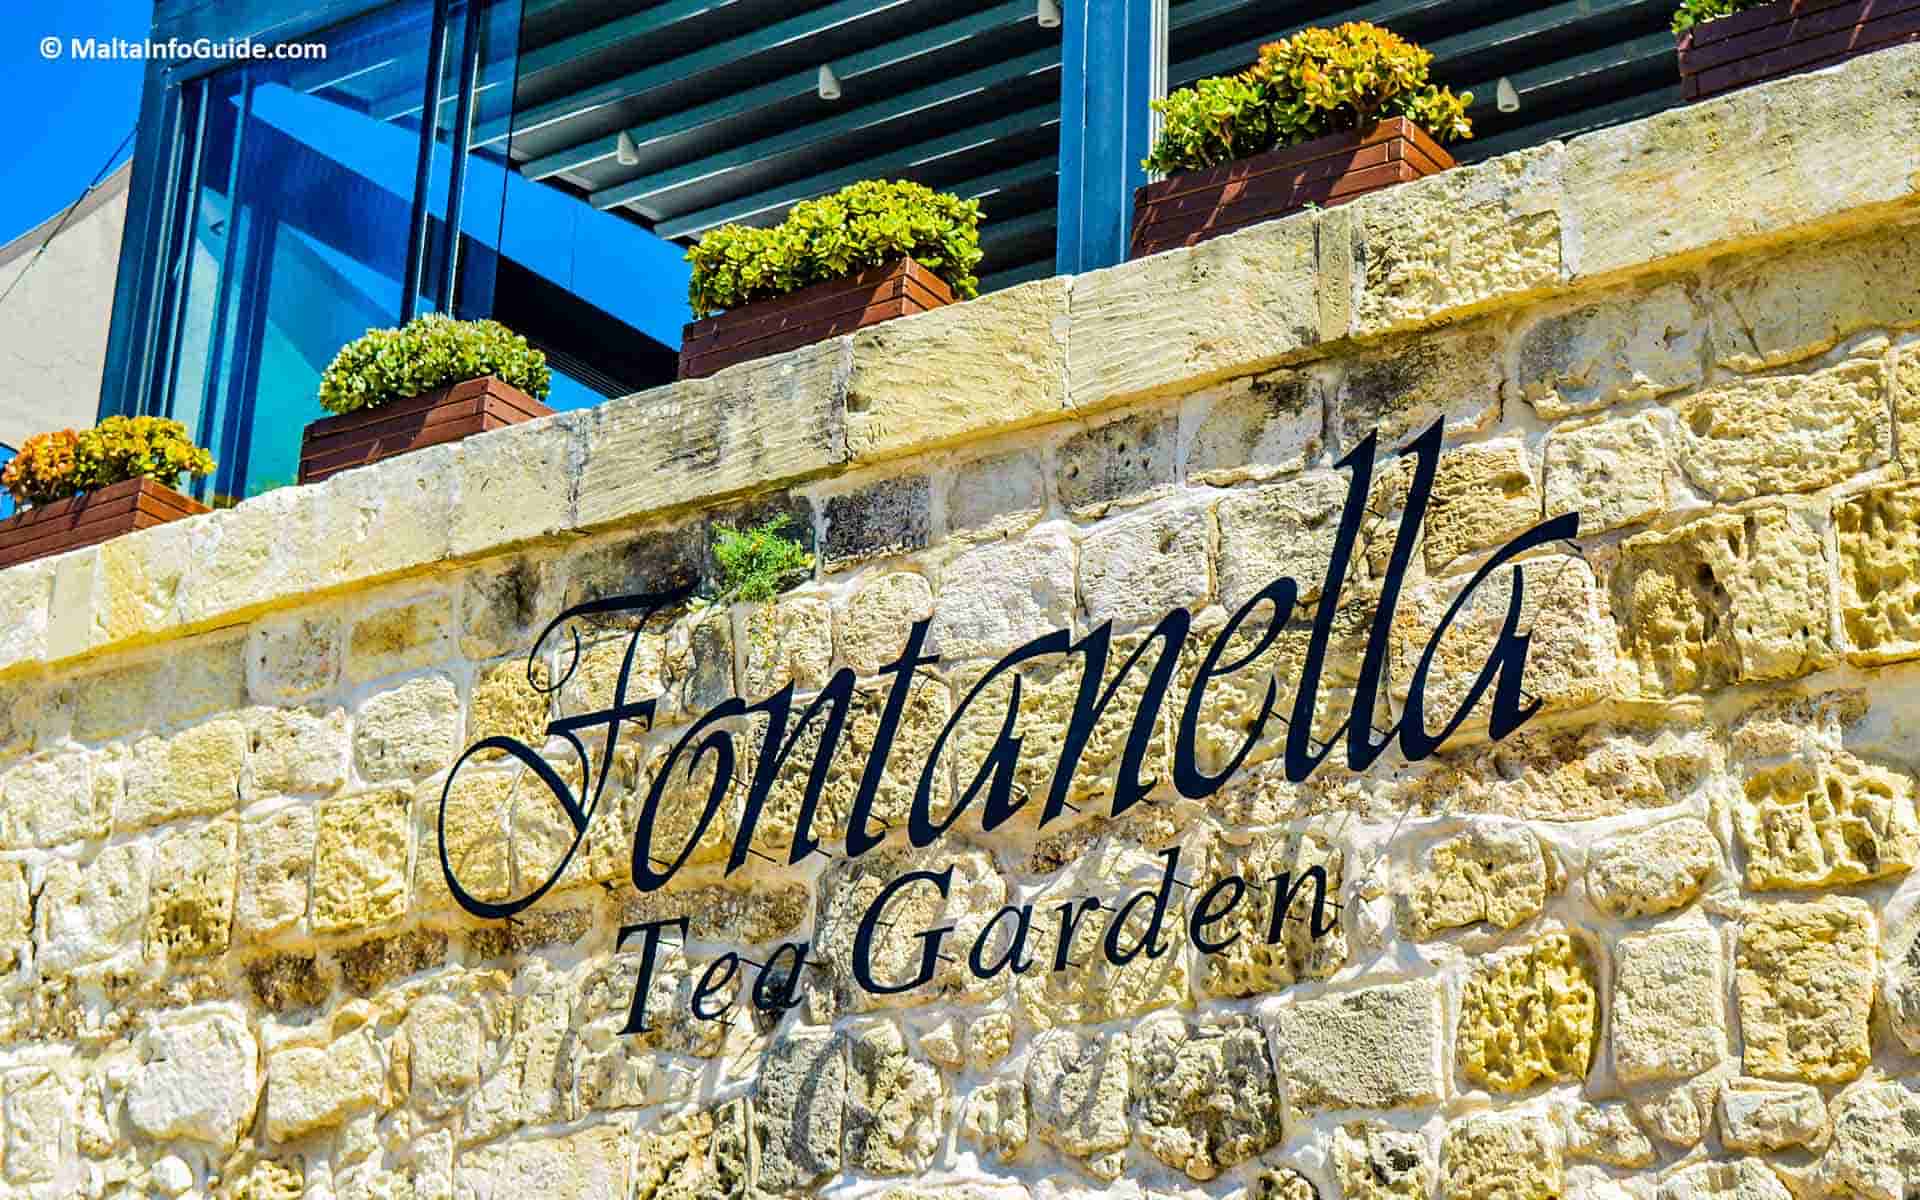 The Fontanella sign outside the Mdina restaurants.